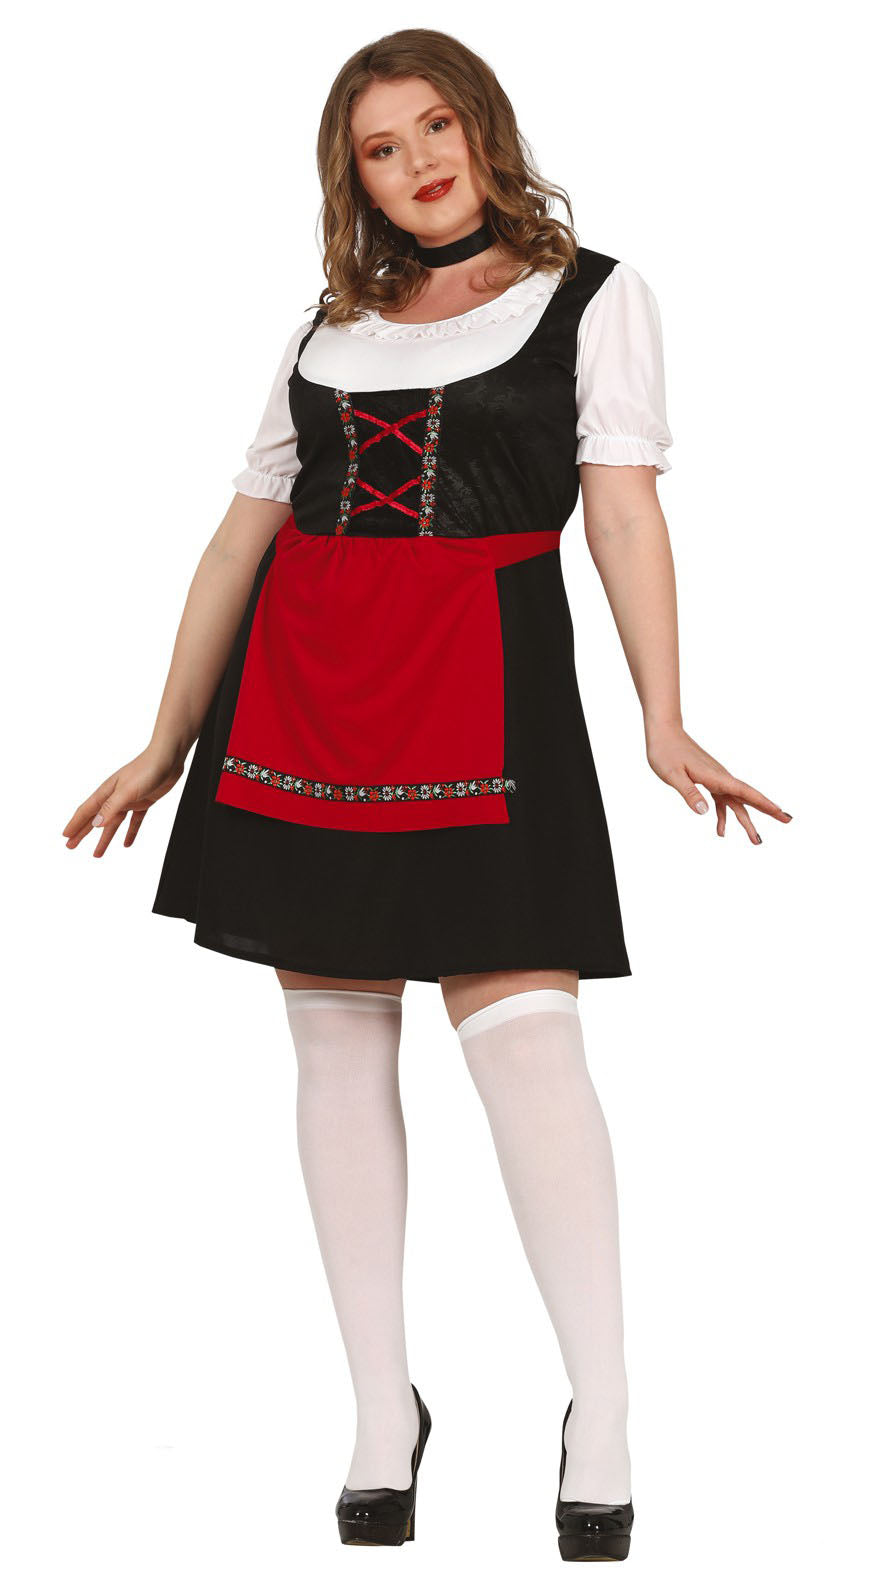 Ladies Bavarian Woman Beer Festival Costume includes dress